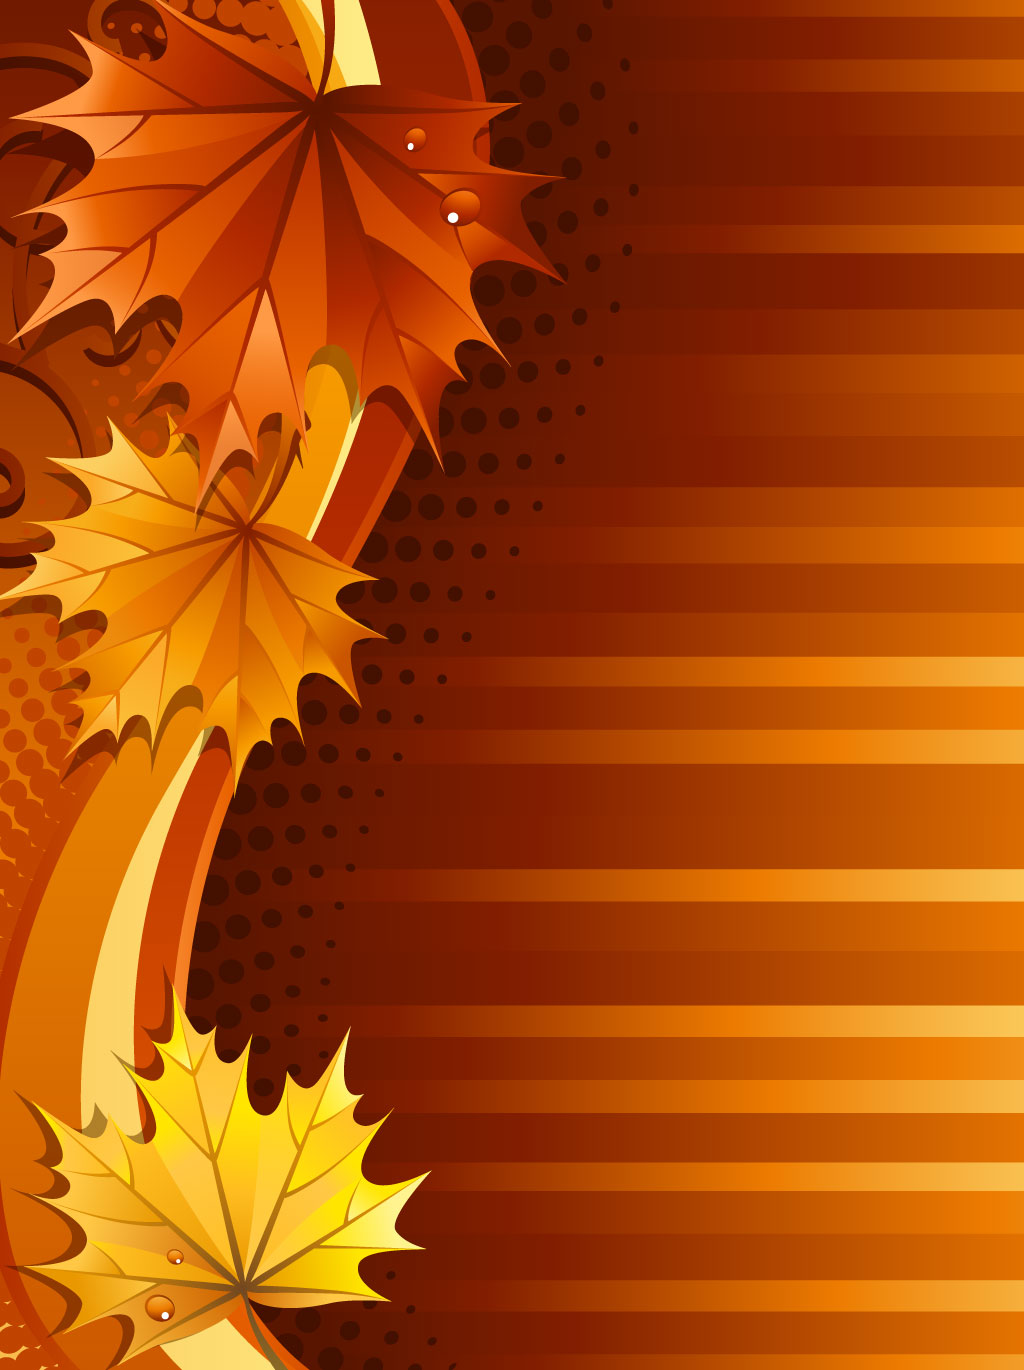 Autumn Leaf Background Vector Art & Graphics | freevector.com